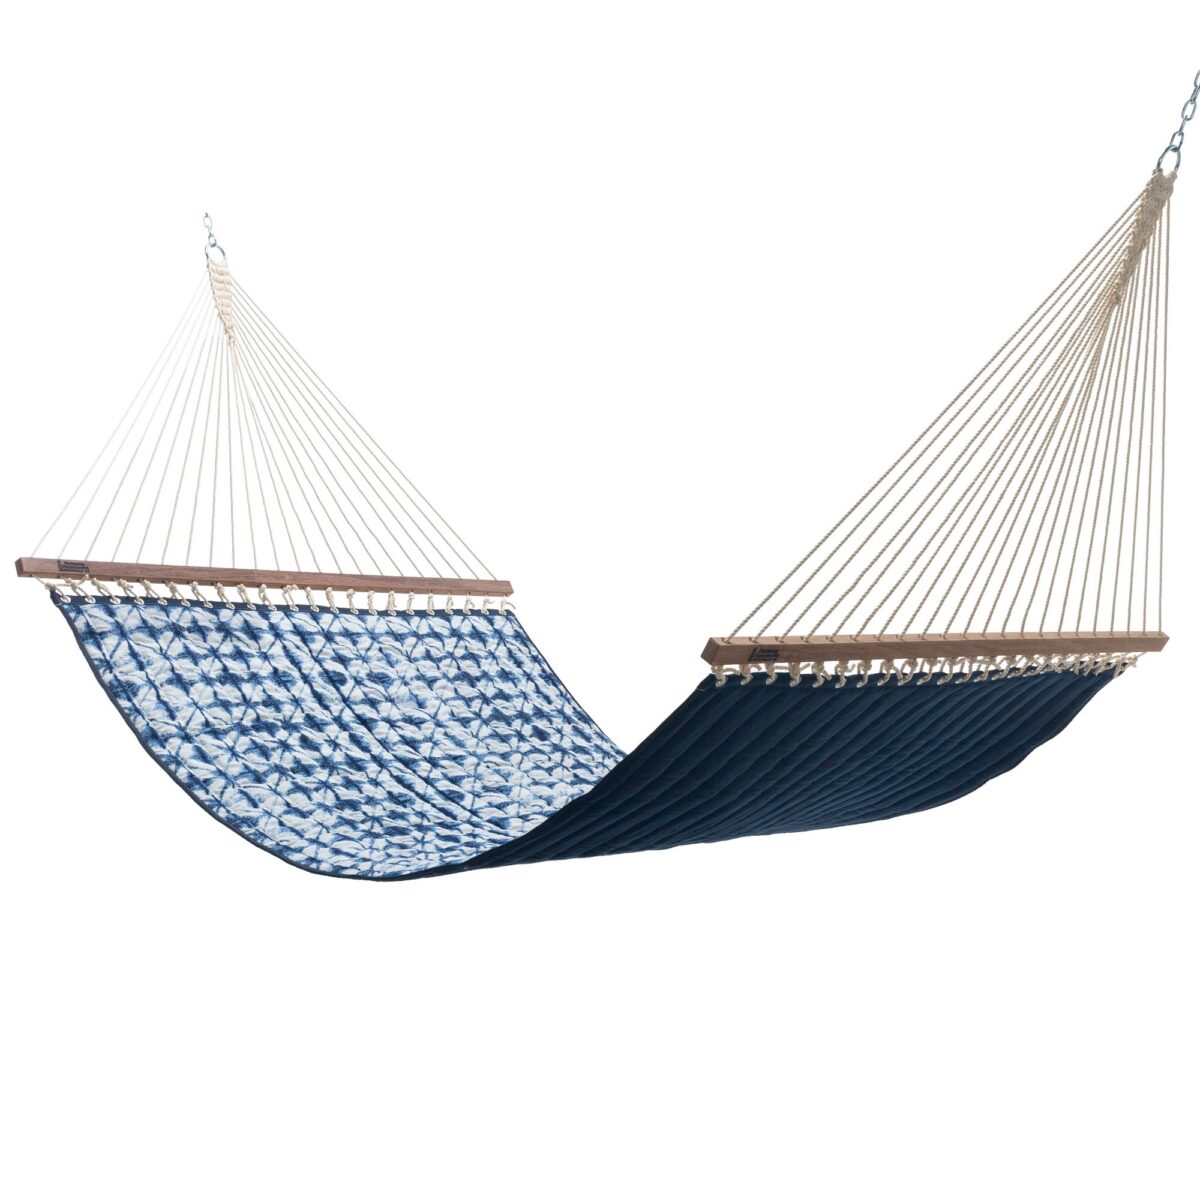 the best luxury outdoor hammocks for a chic backyard